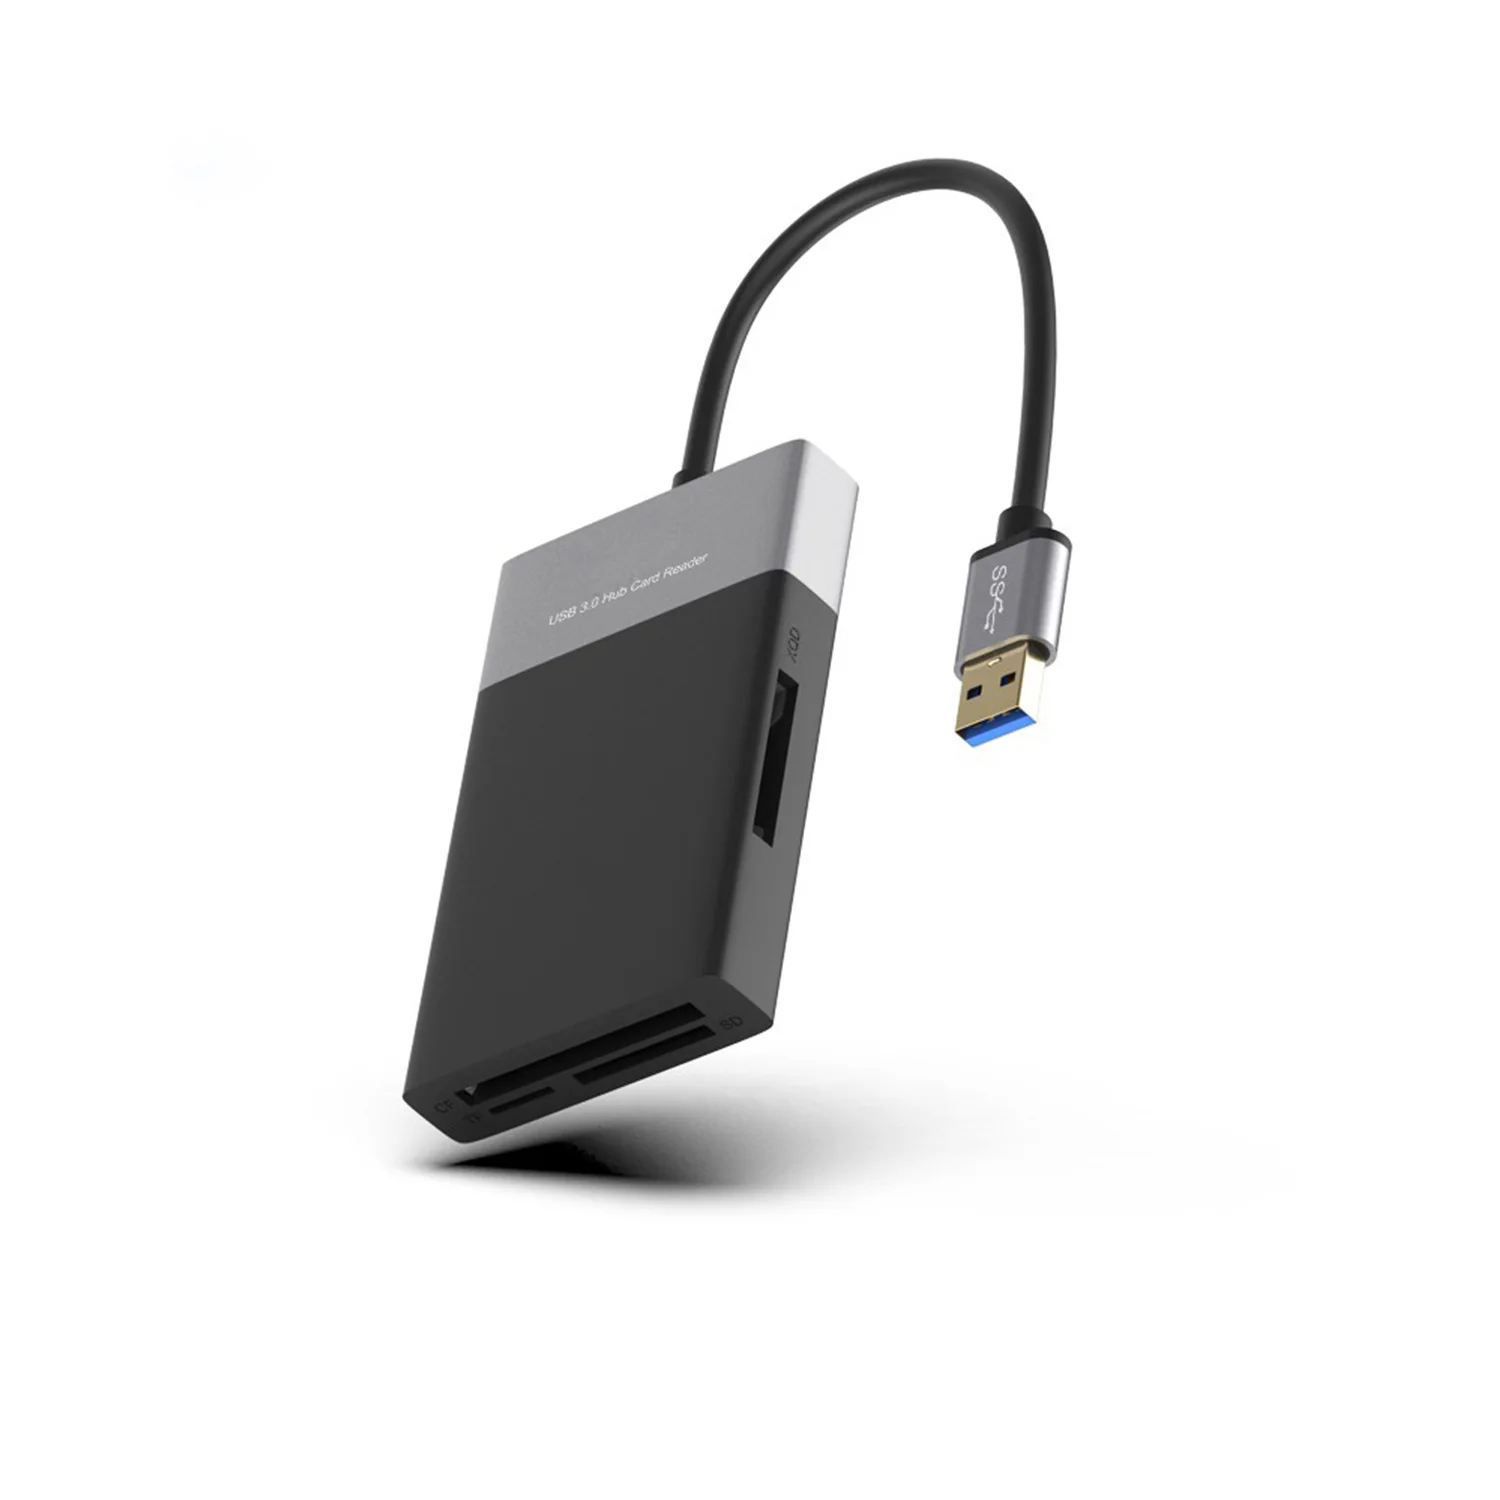 

Устройство чтения карт памяти XQD с 2 USB-портами 3,0 для Sony серии G/M, Lexar 2933X/1400X, Windows/Mac OS